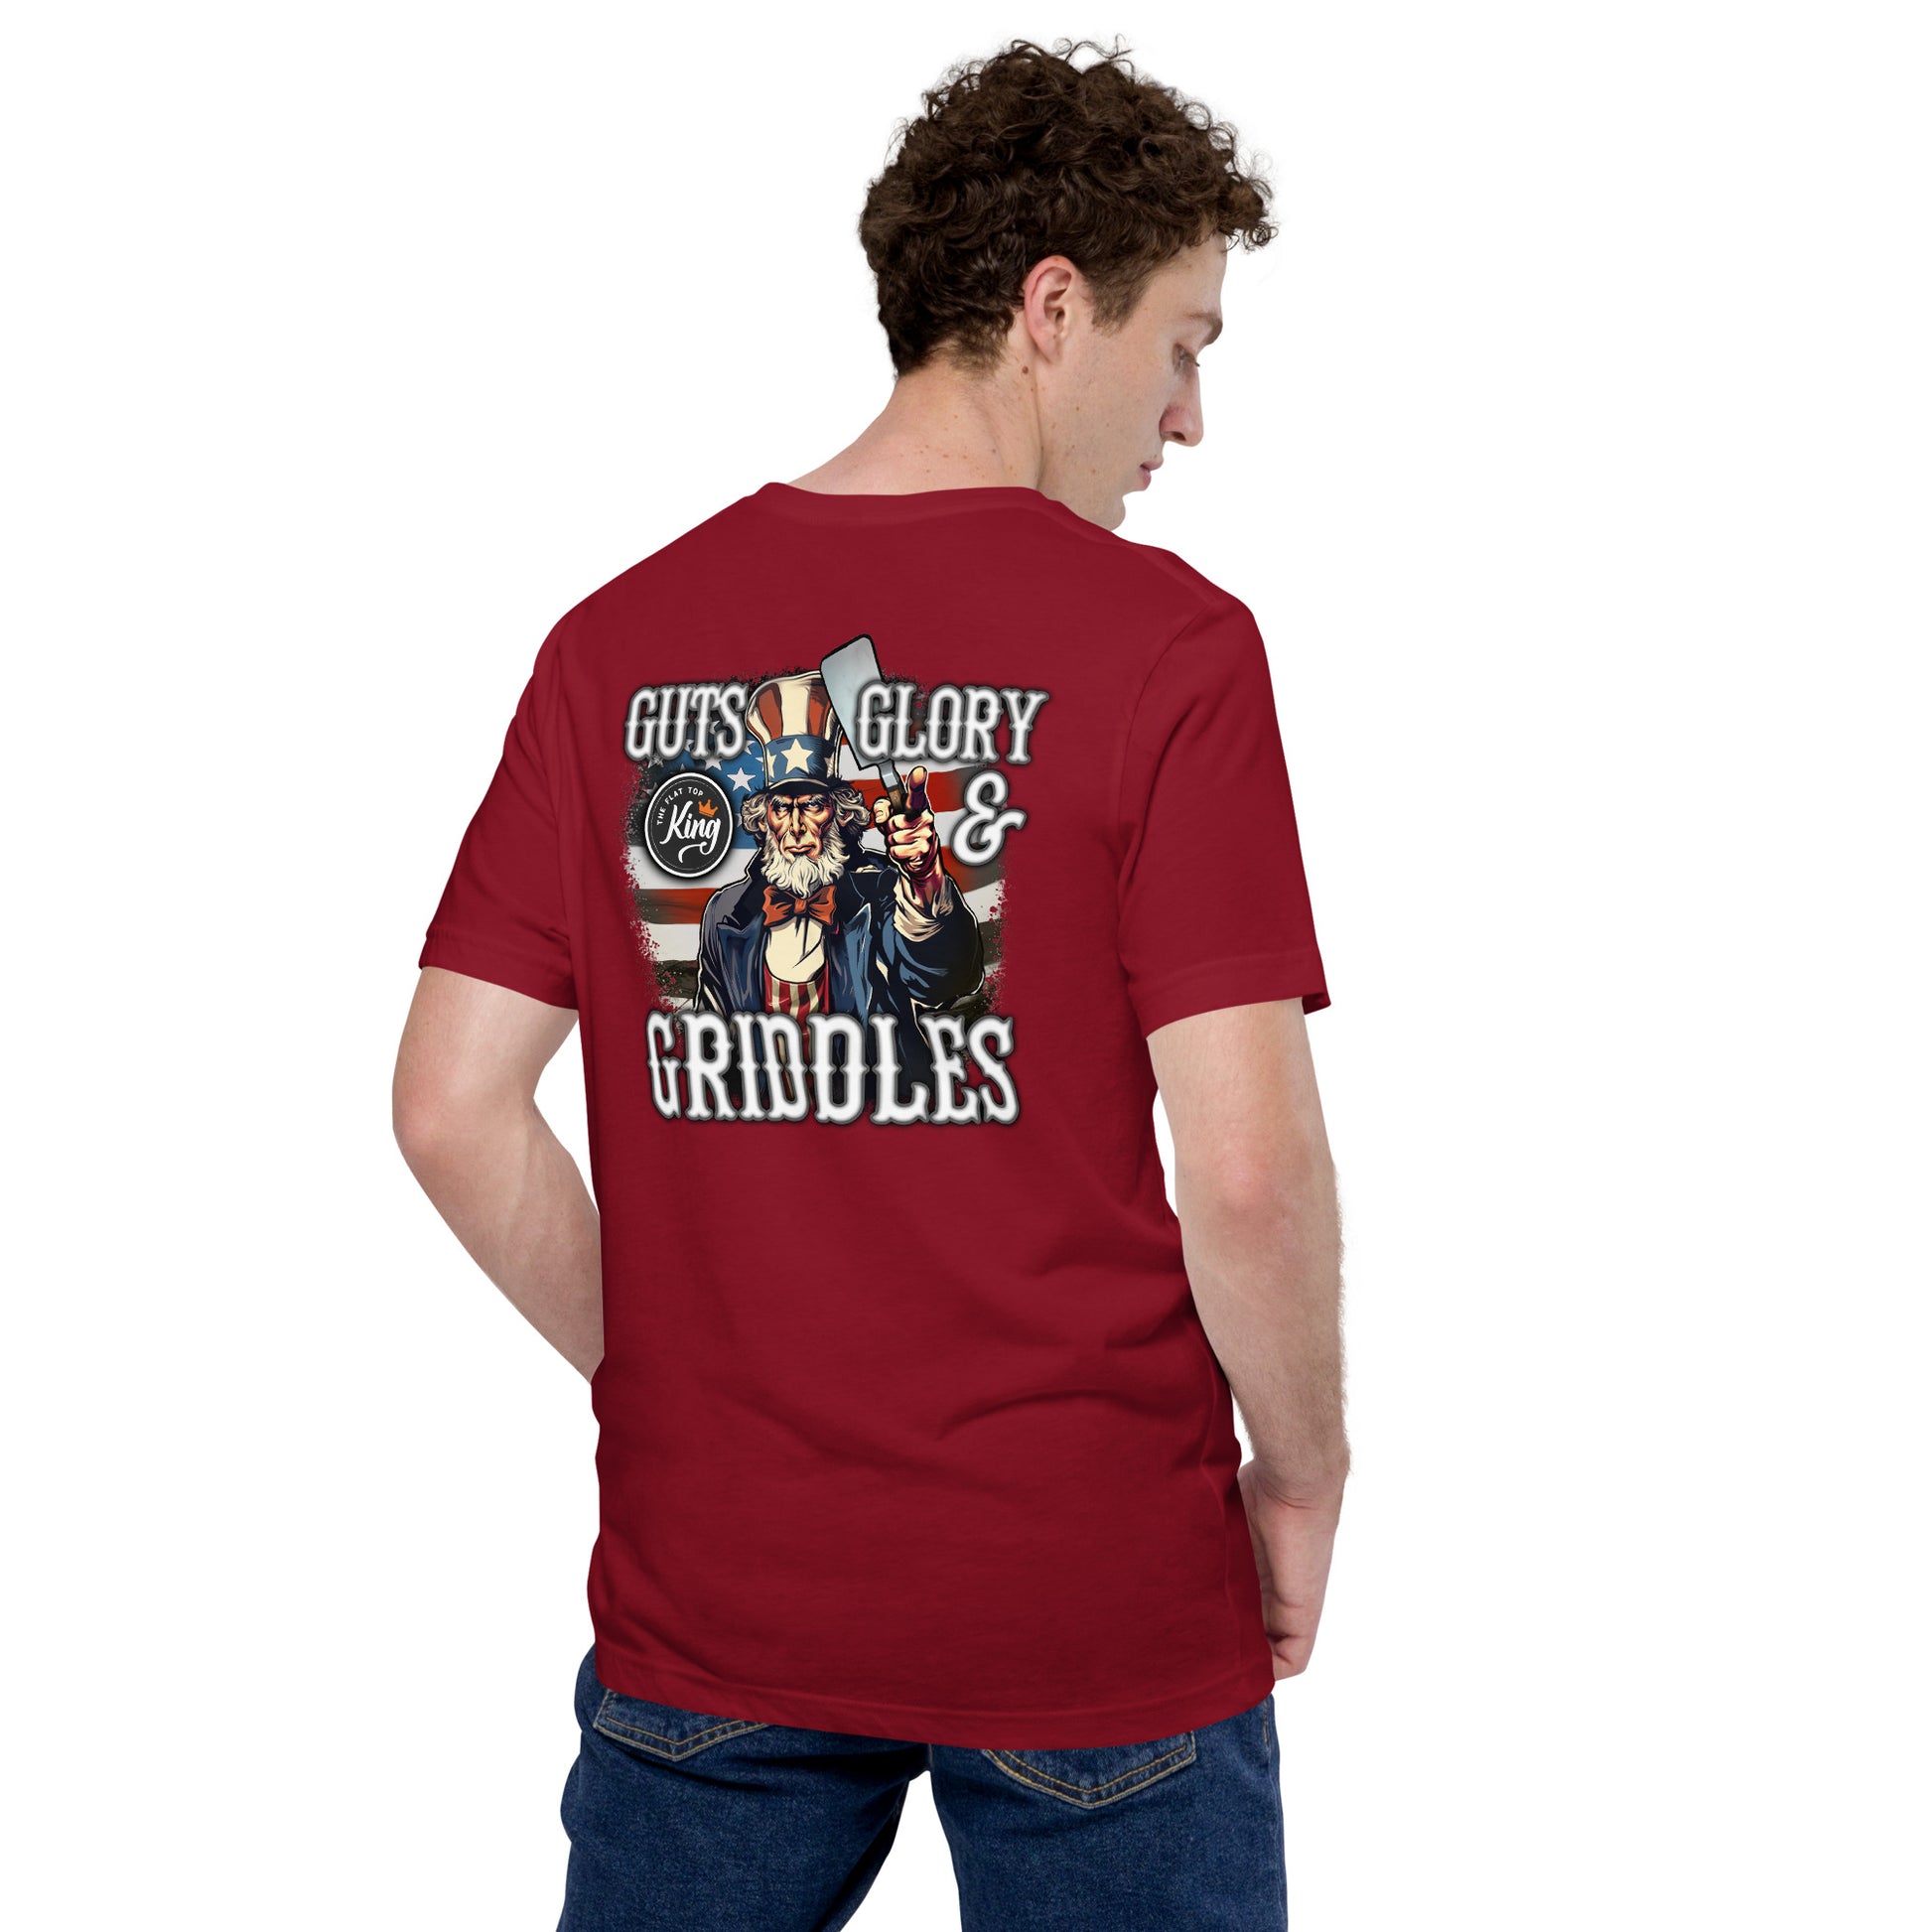 No Guts, No Glory - Galaxy Rangers T-Shirt - The Shirt List